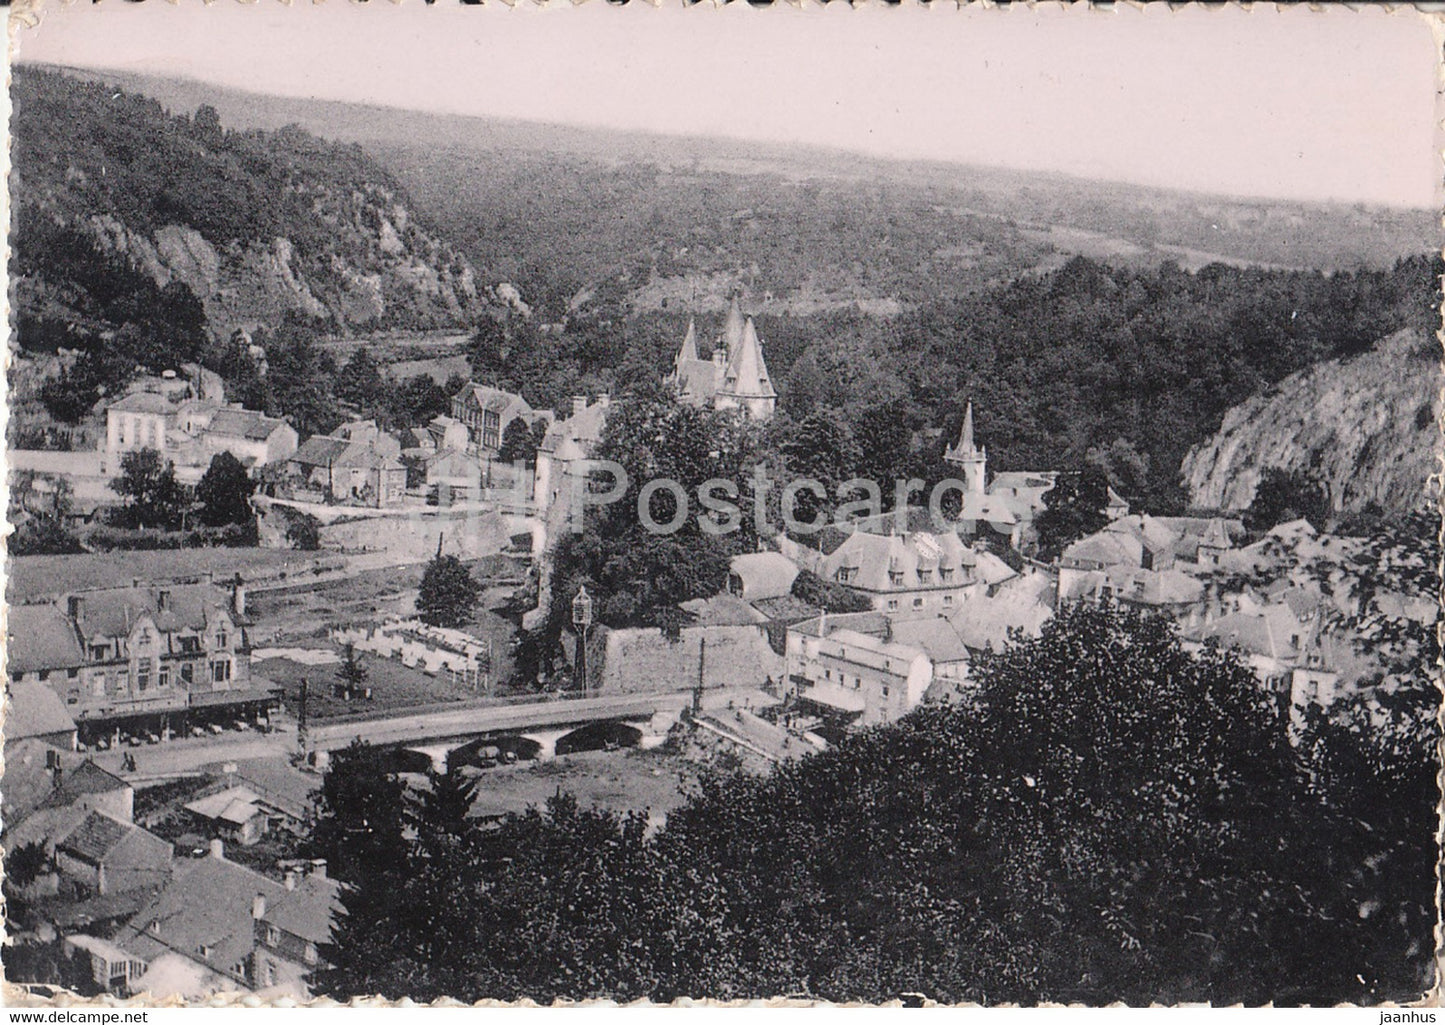 Durbuy - panorama - Ardenne Belge - old postcard - 1953 - Belgium - used - JH Postcards